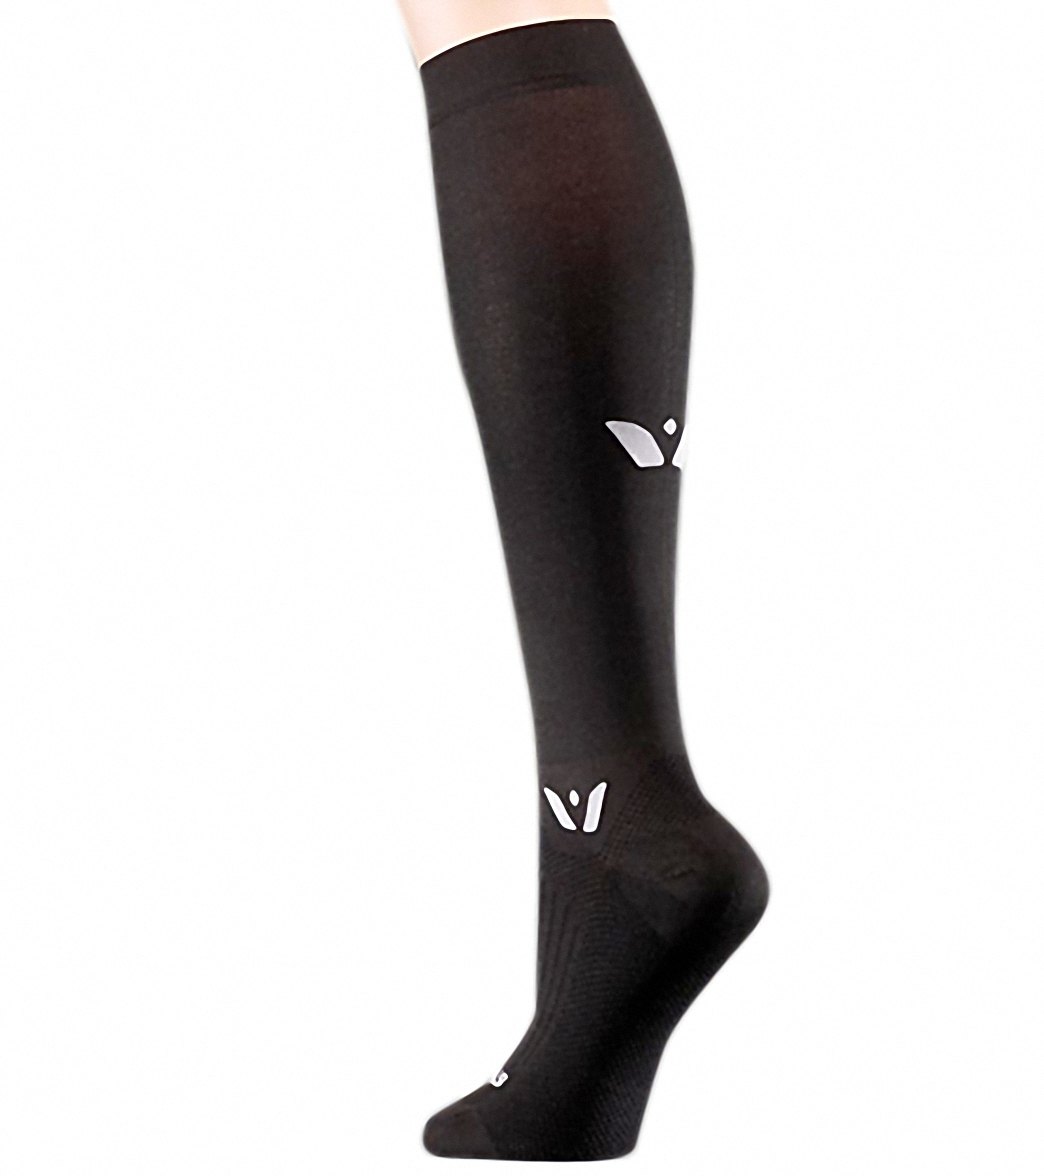 Swiftwick Aspire Twelve Compression Running Socks - Black Medium Size Medium - Swimoutlet.com